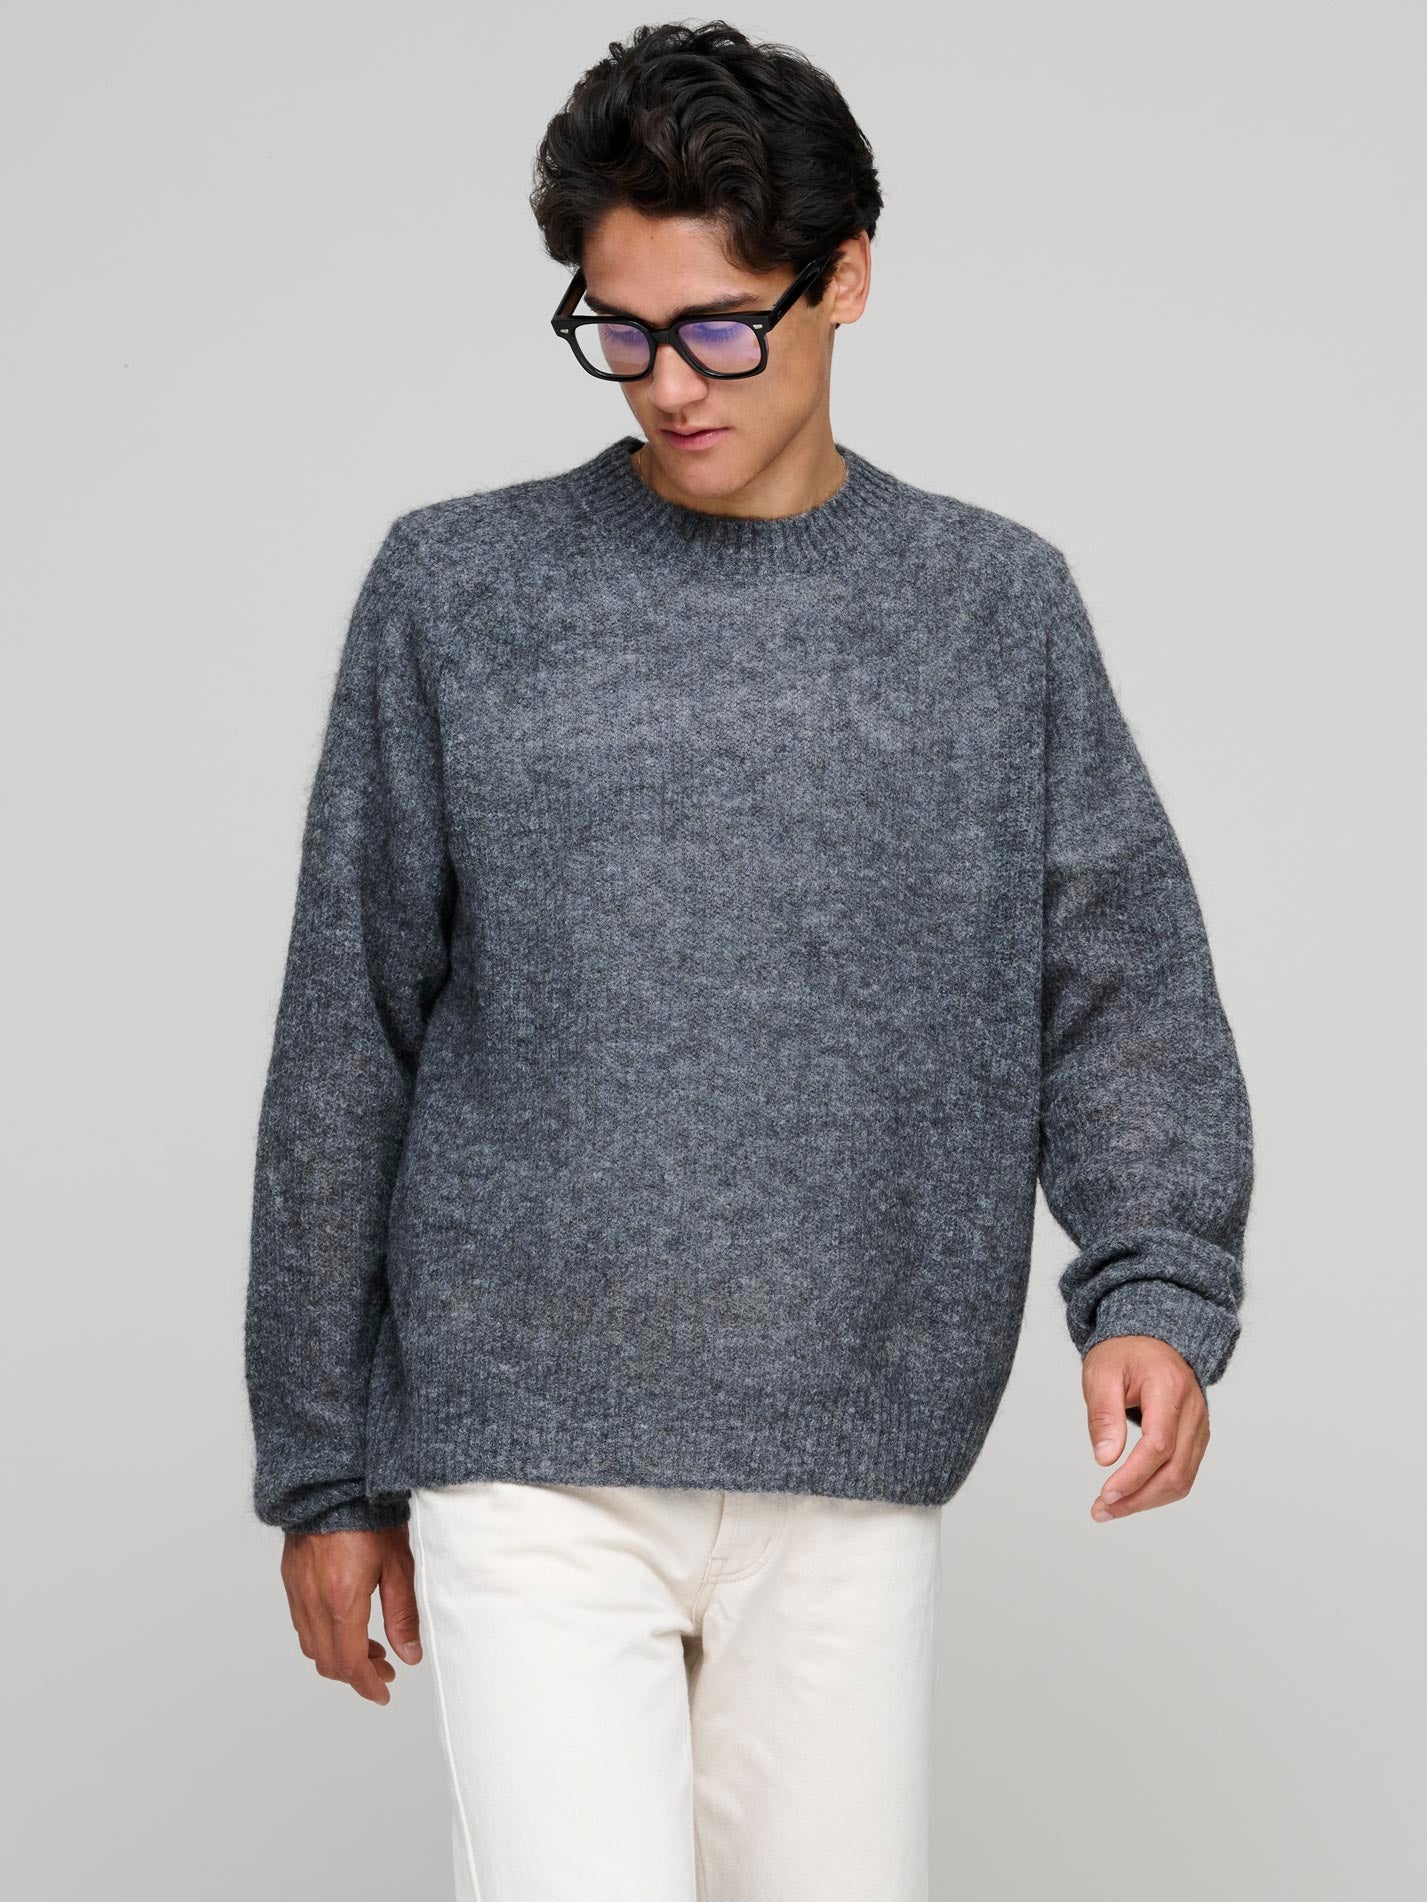 BERNER KUHL Crew neck sweaters for Men